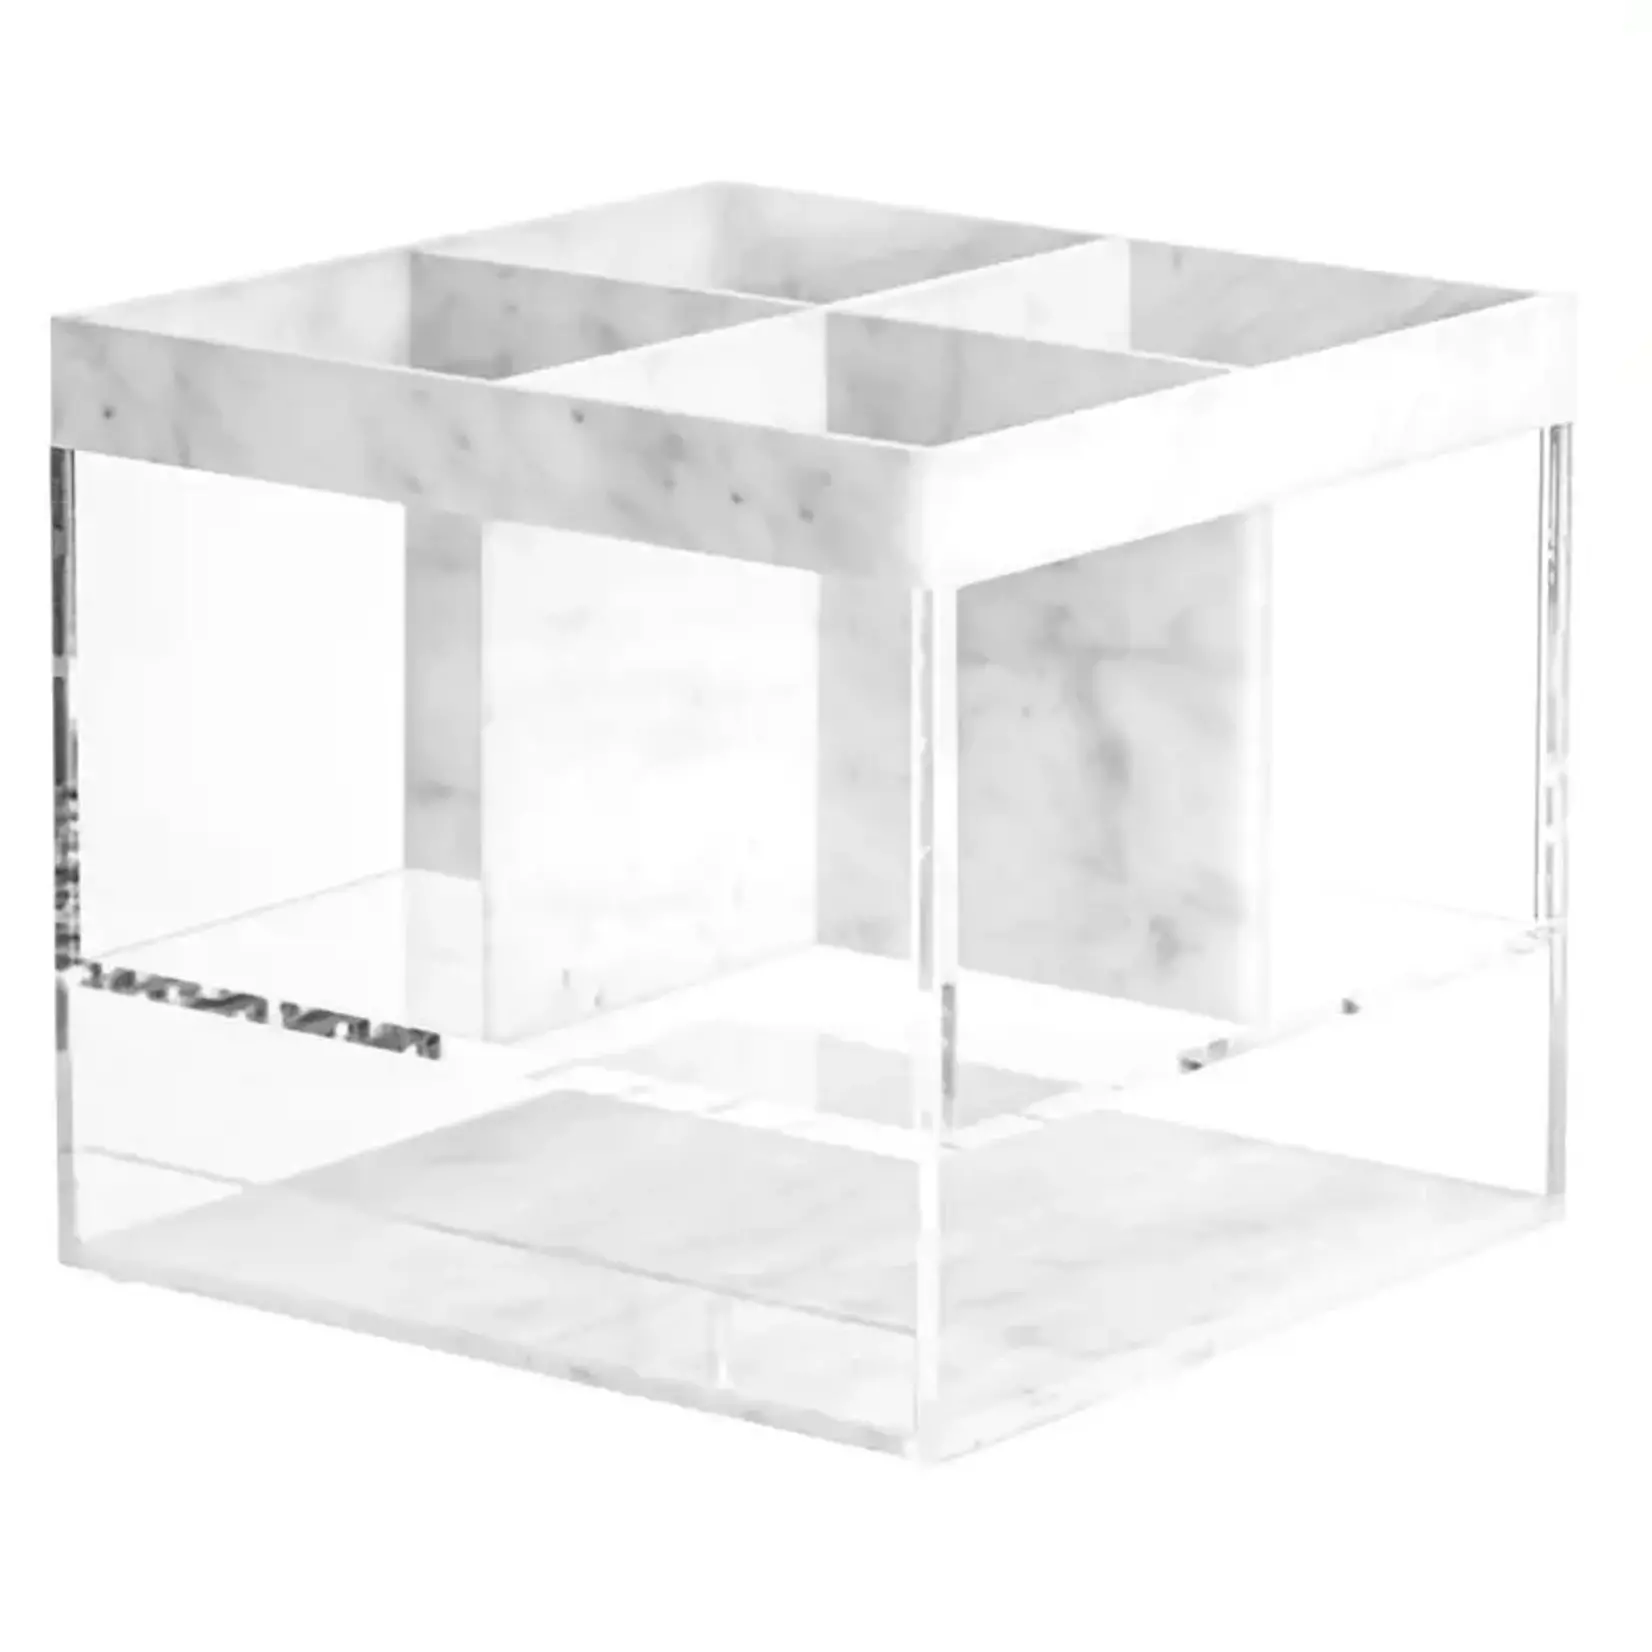 https://cdn.shoplightspeed.com/shops/627977/files/59310361/1652x1652x2/swc-sq-m-c-silverware-caddy-square-marble.jpg